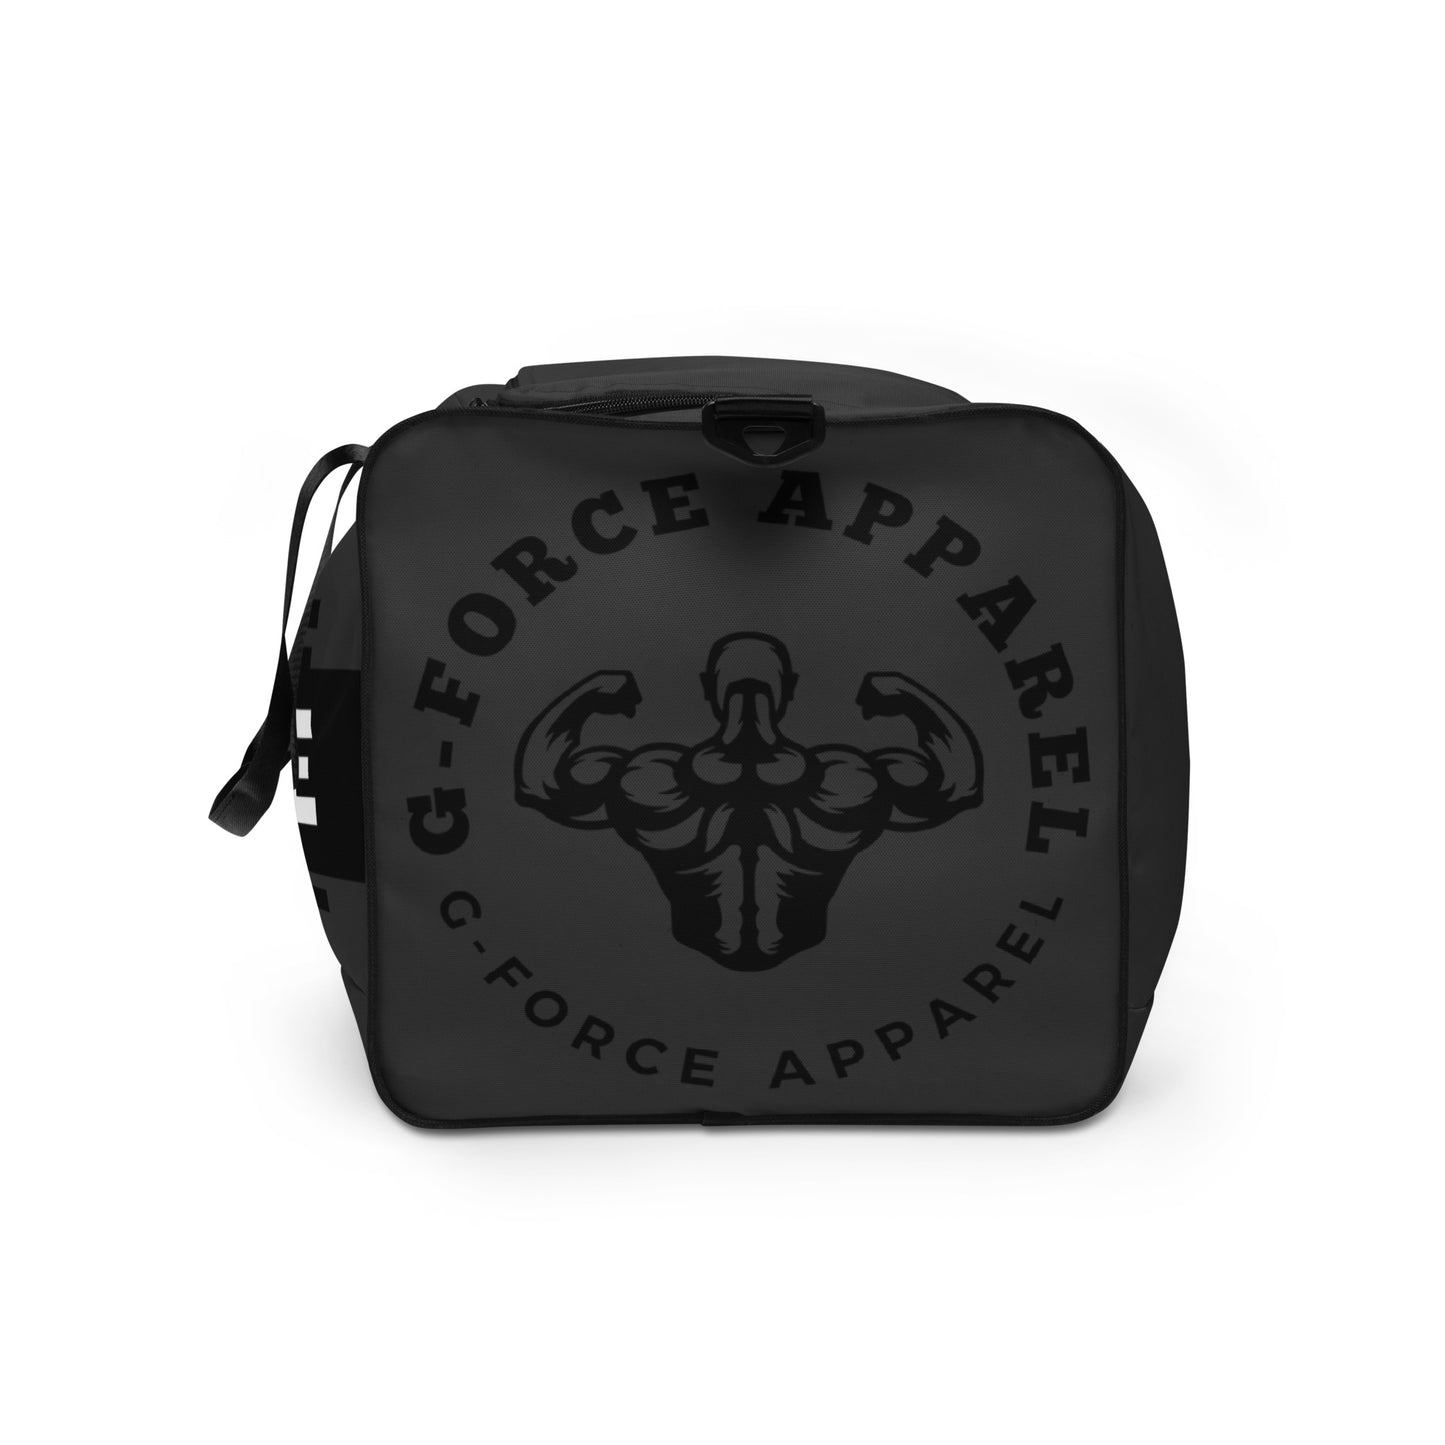 G-FORCE APPAREL Sports bag